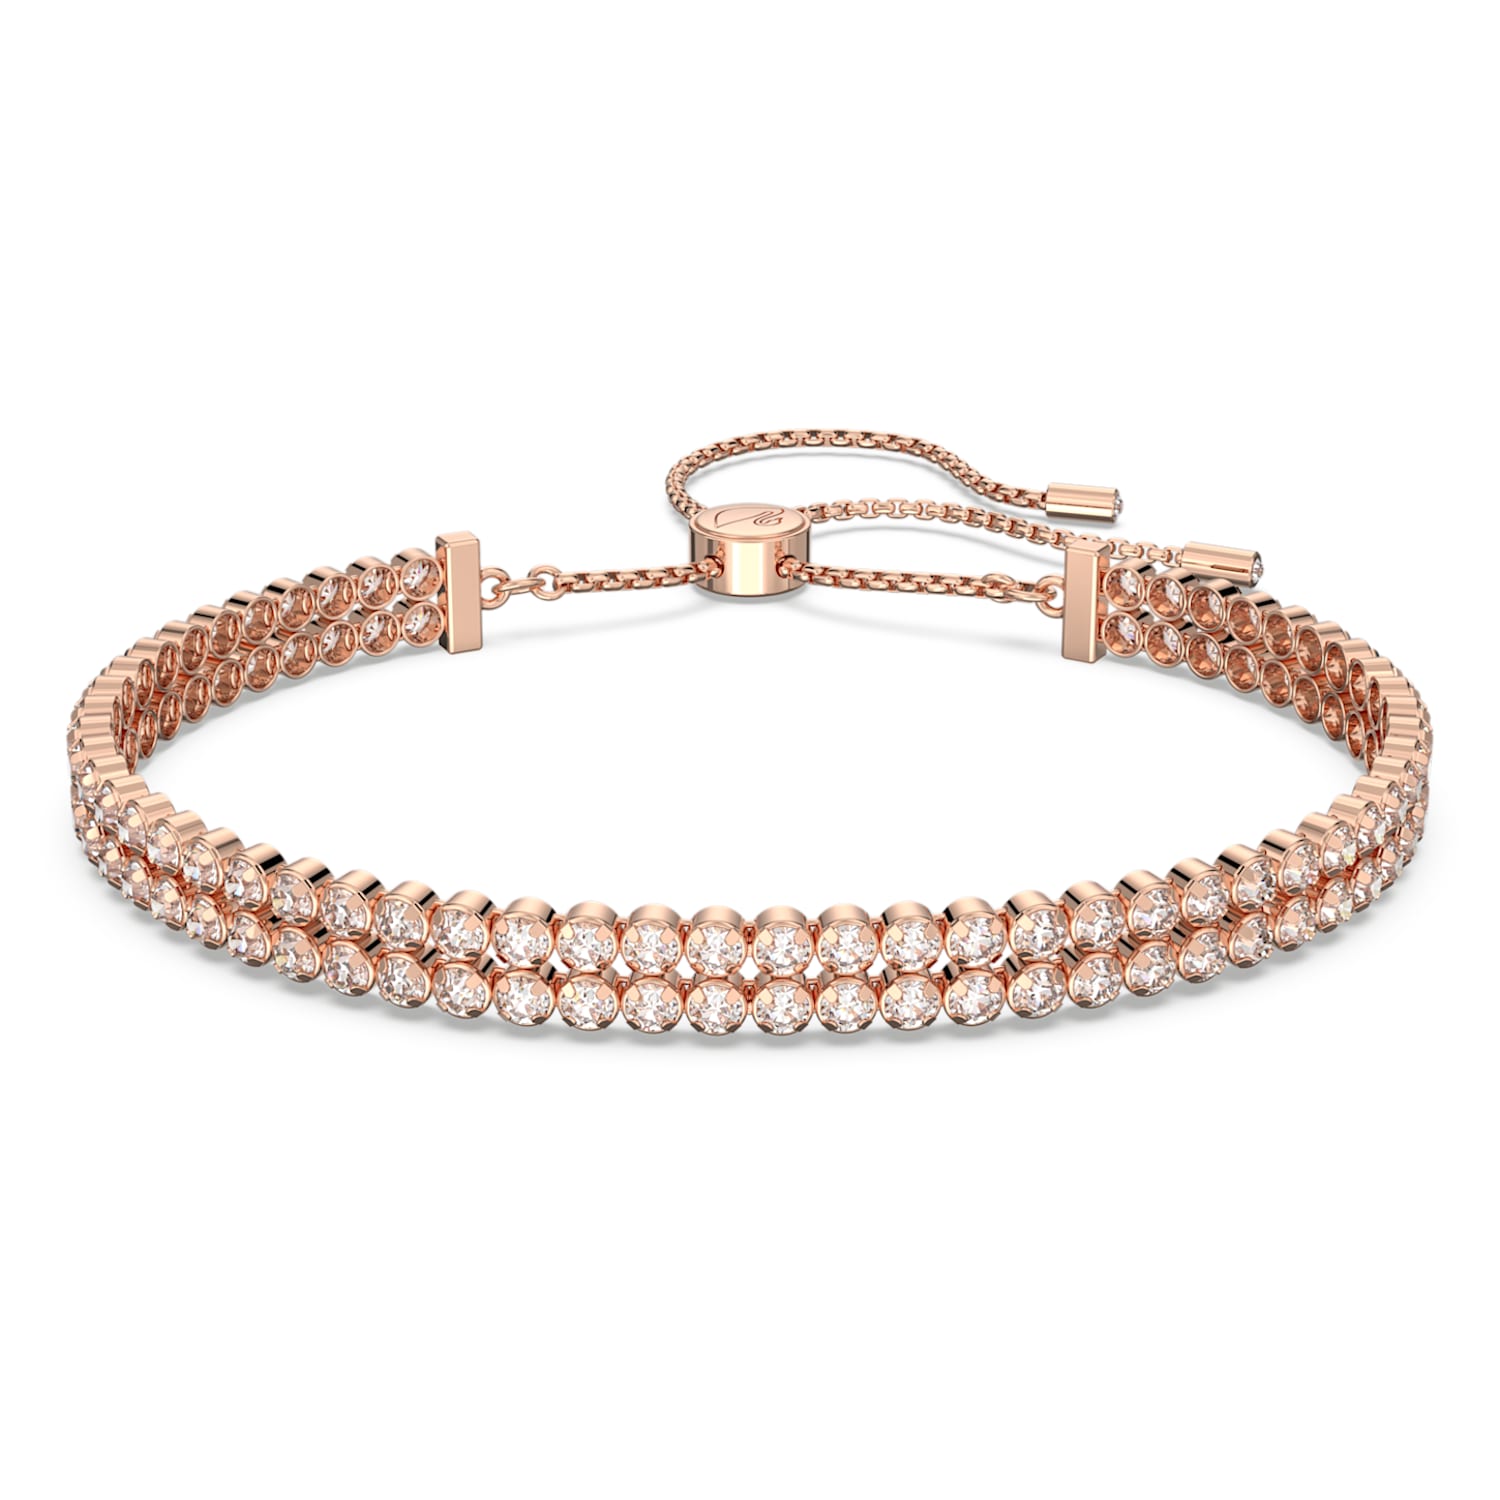 Rosé bracelet with radial charms and Swarovski